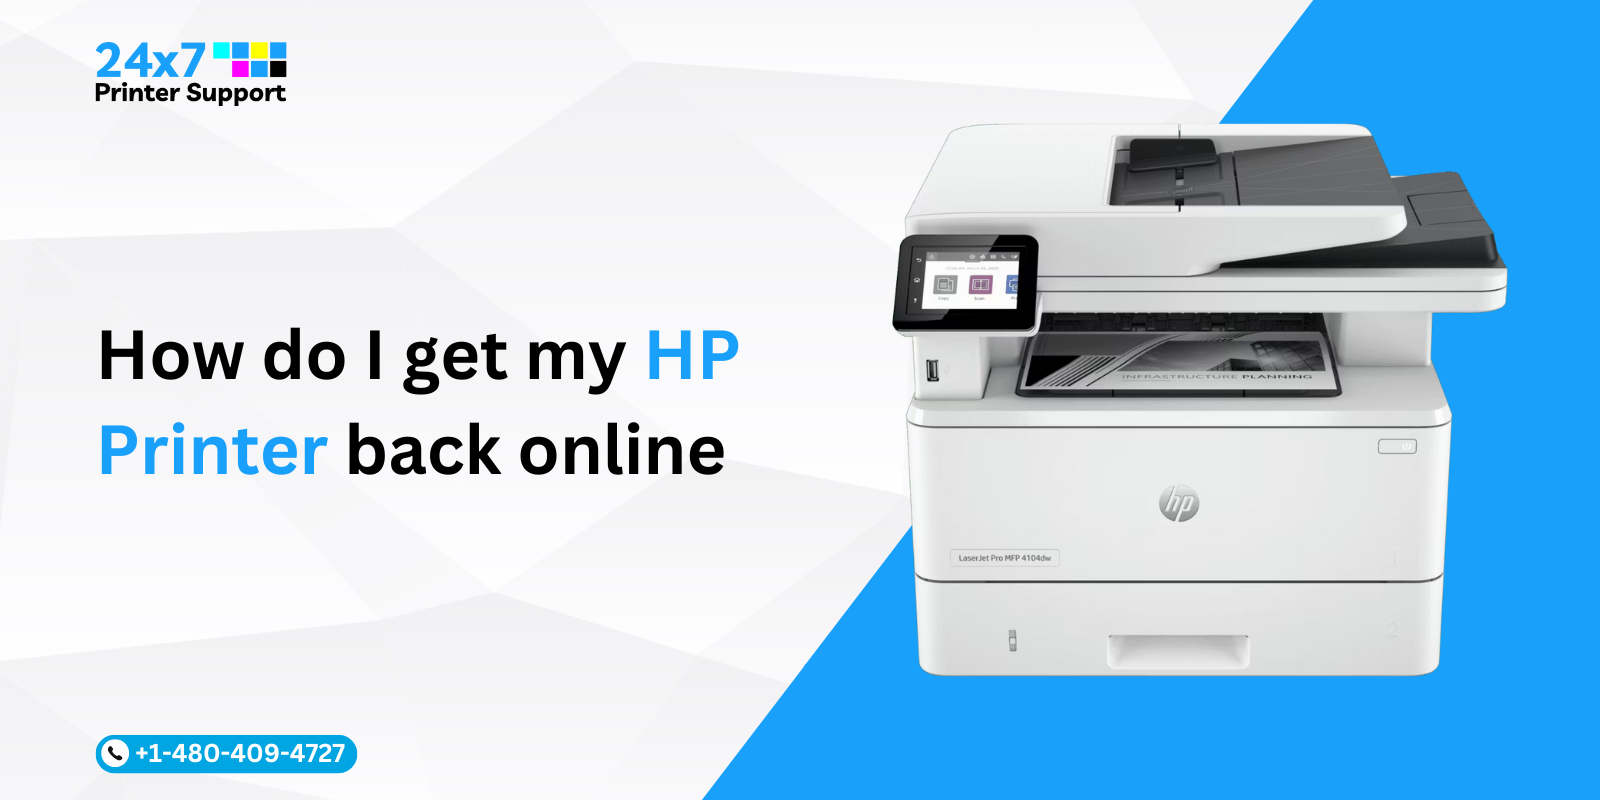 How Do I Get My HP Printer Back Online